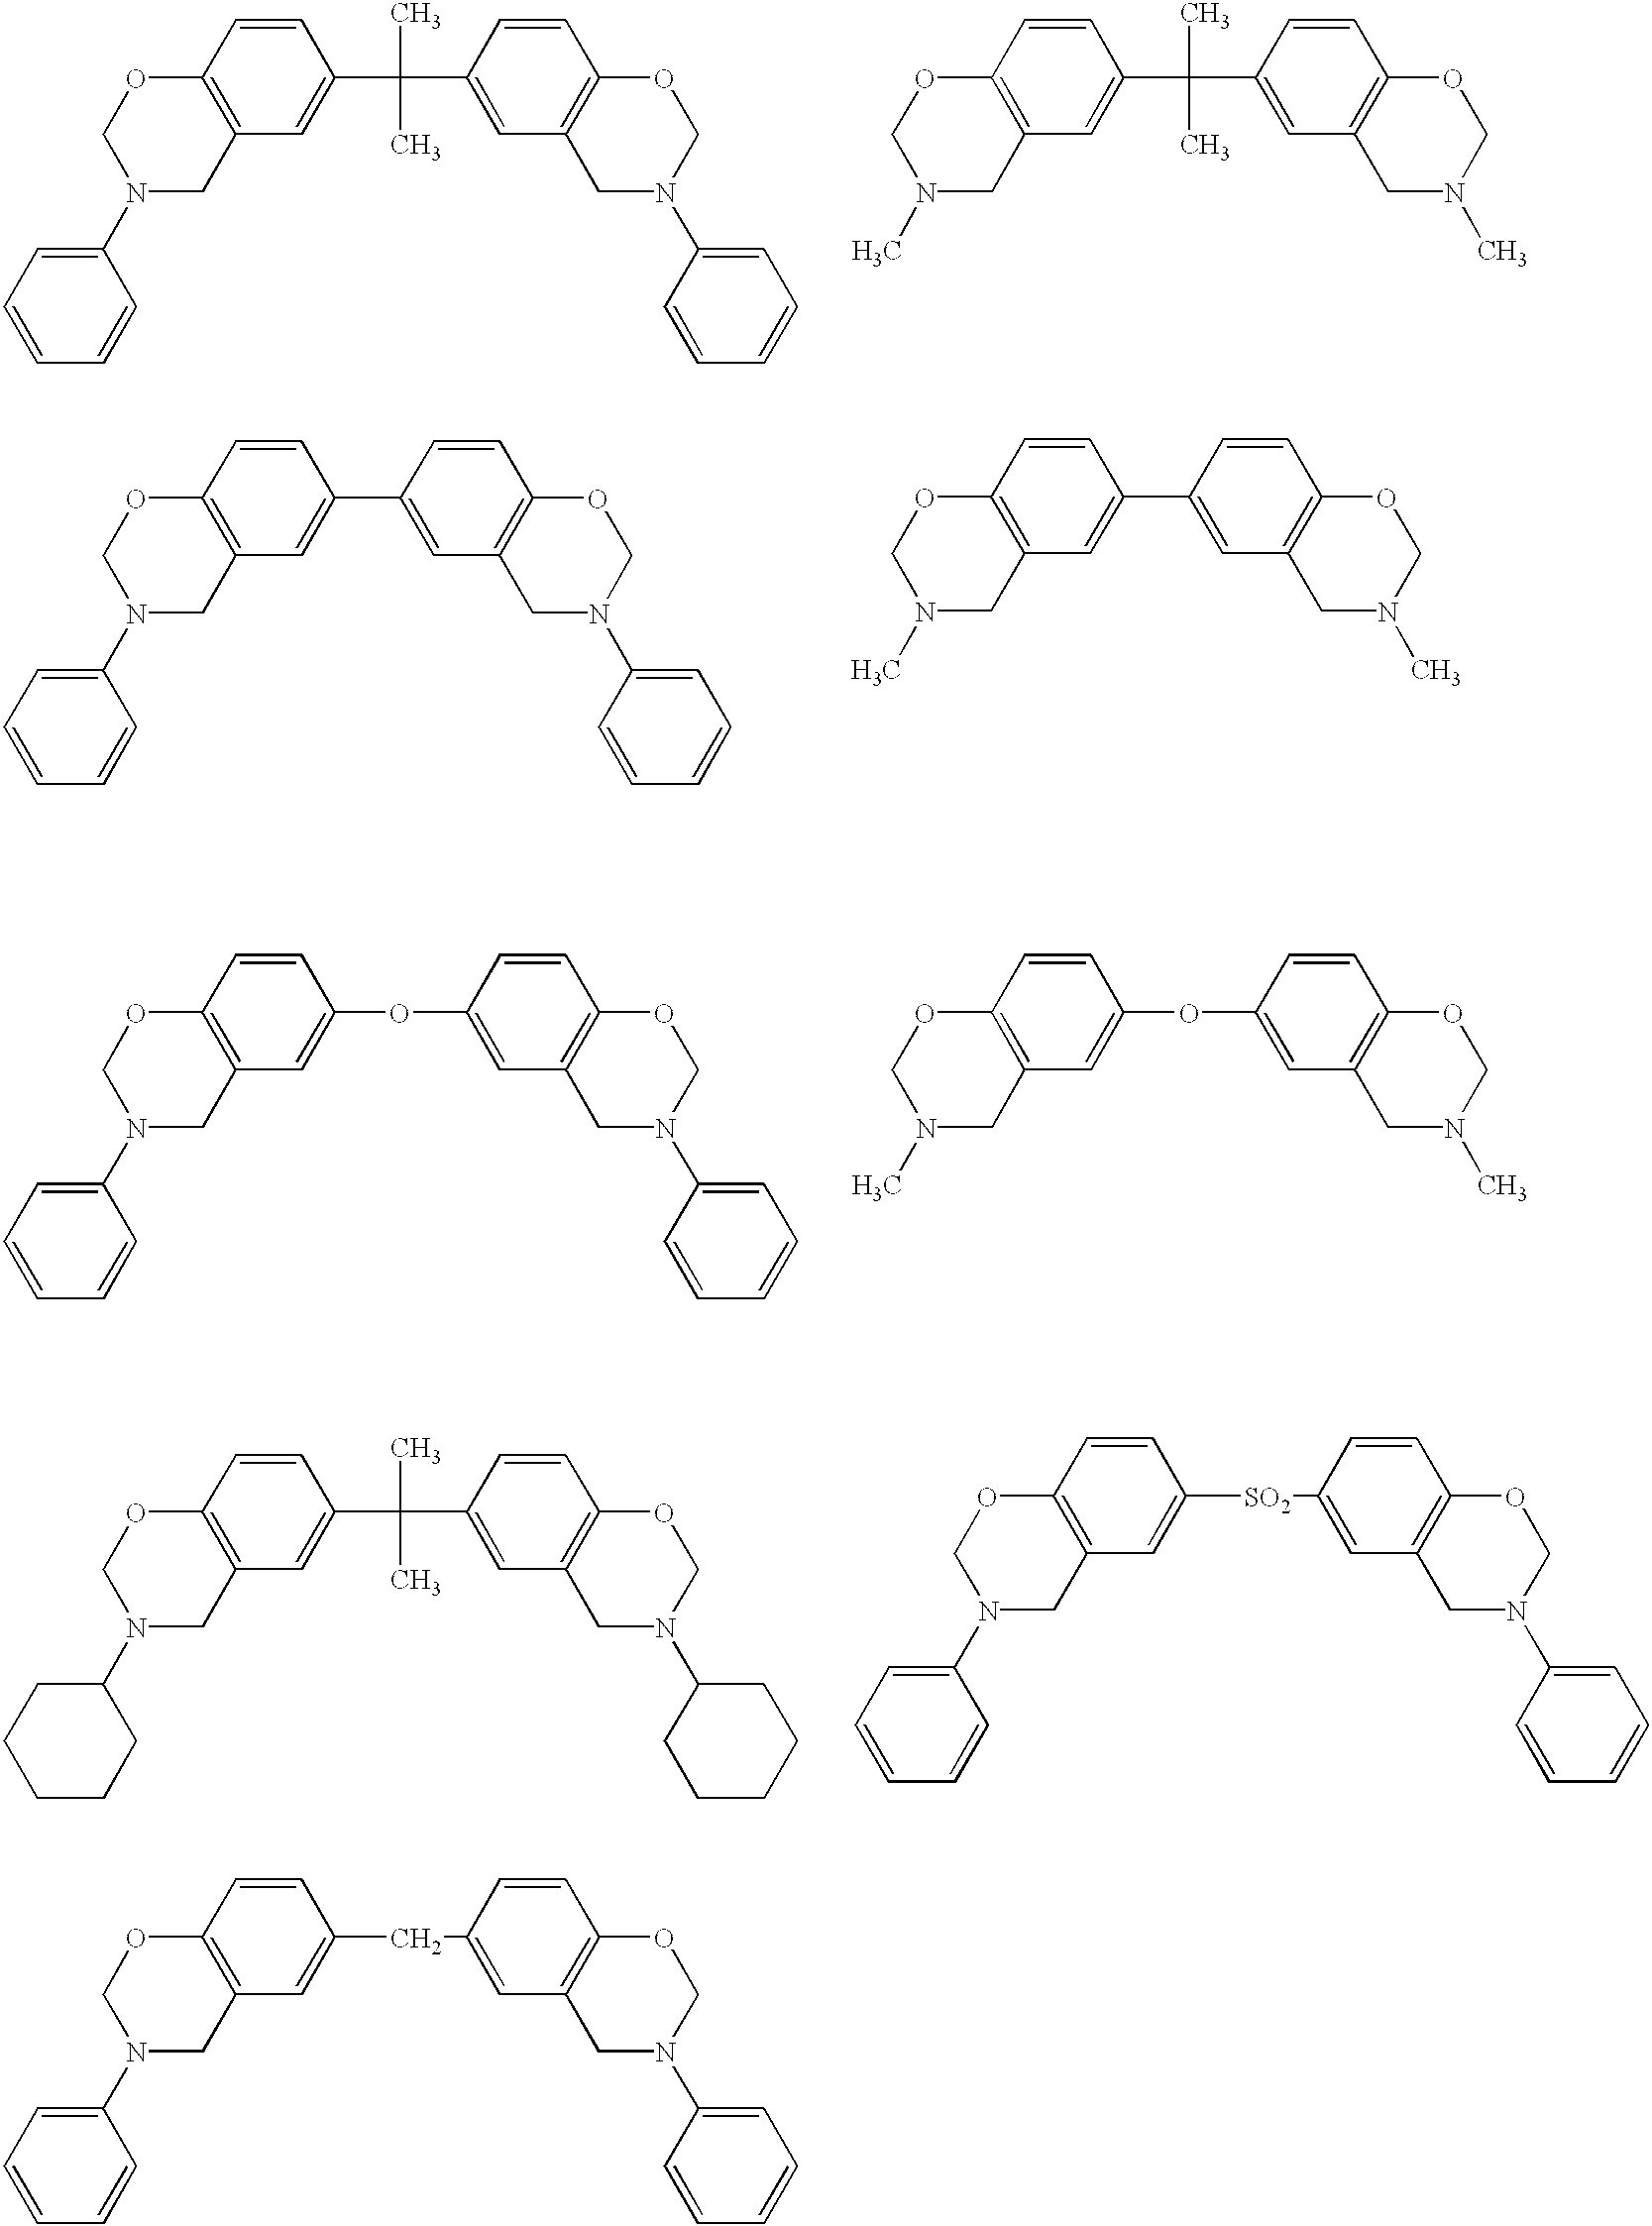 Coating composition containing benzoxazine compound